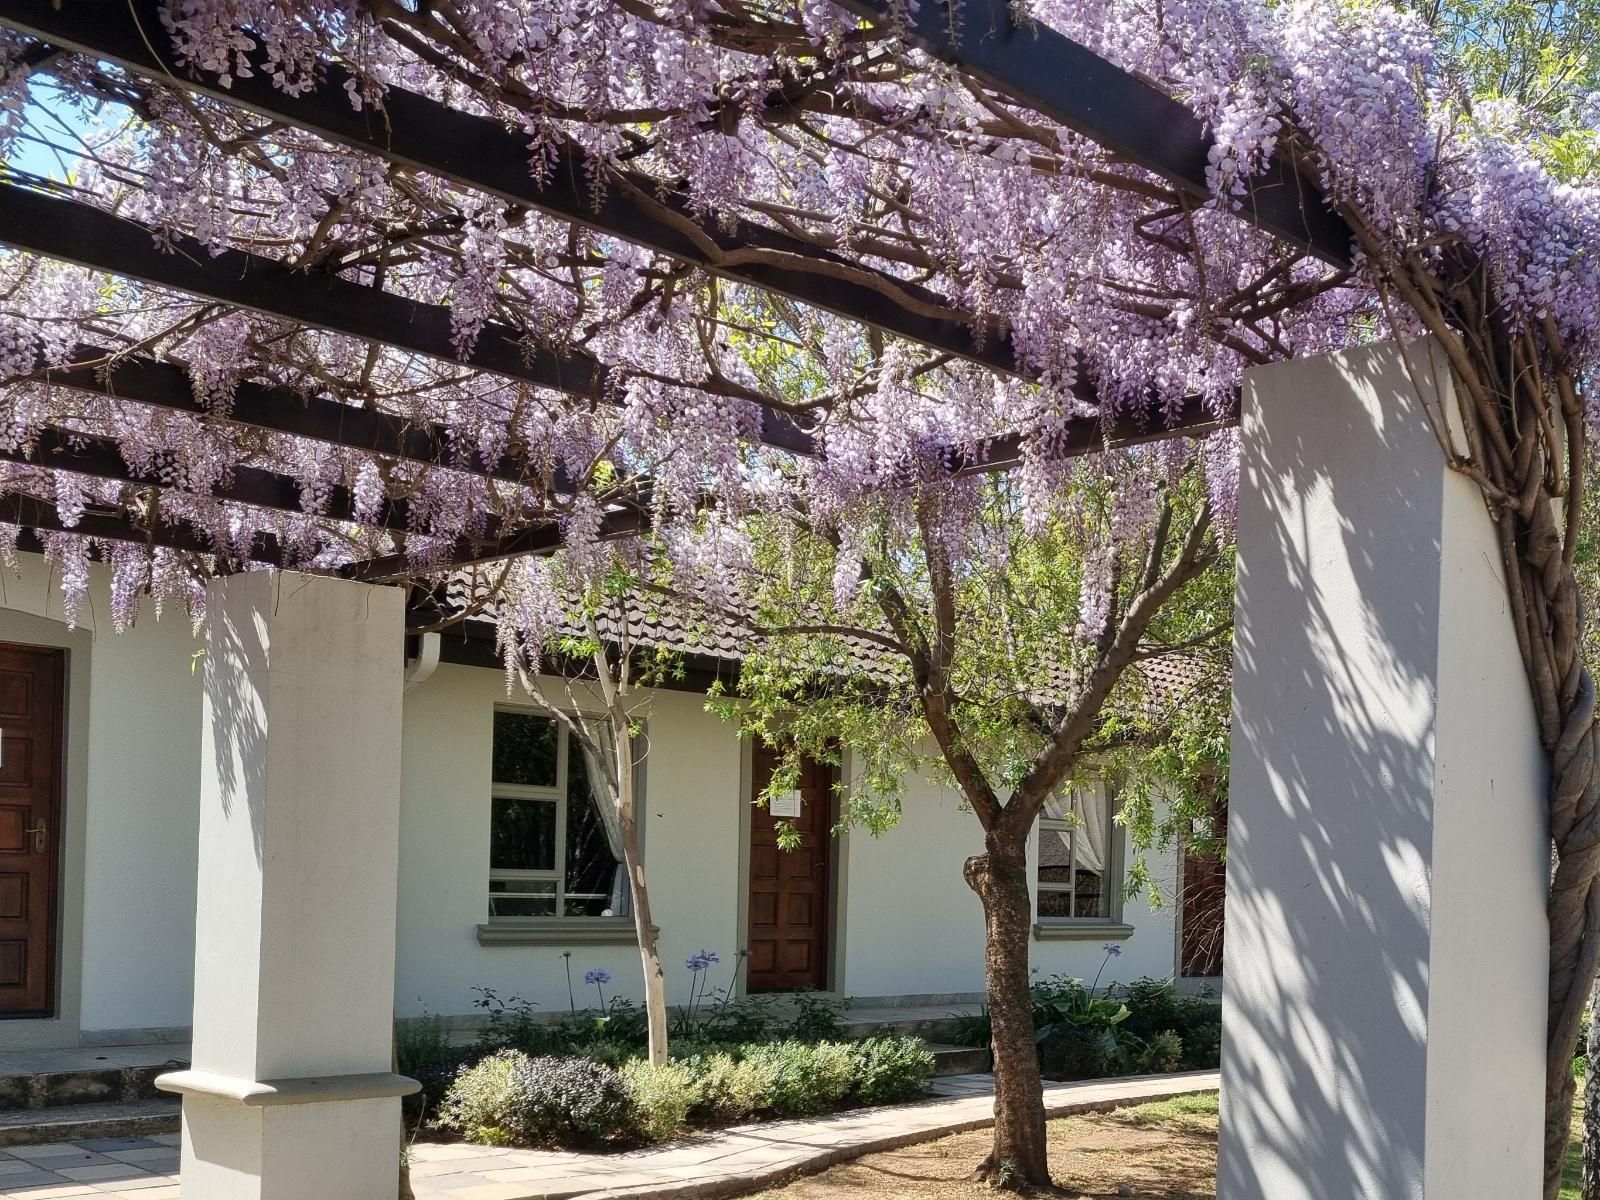 Bergliot Guest House Eastleigh Ridge Johannesburg Gauteng South Africa Blossom, Plant, Nature, House, Building, Architecture